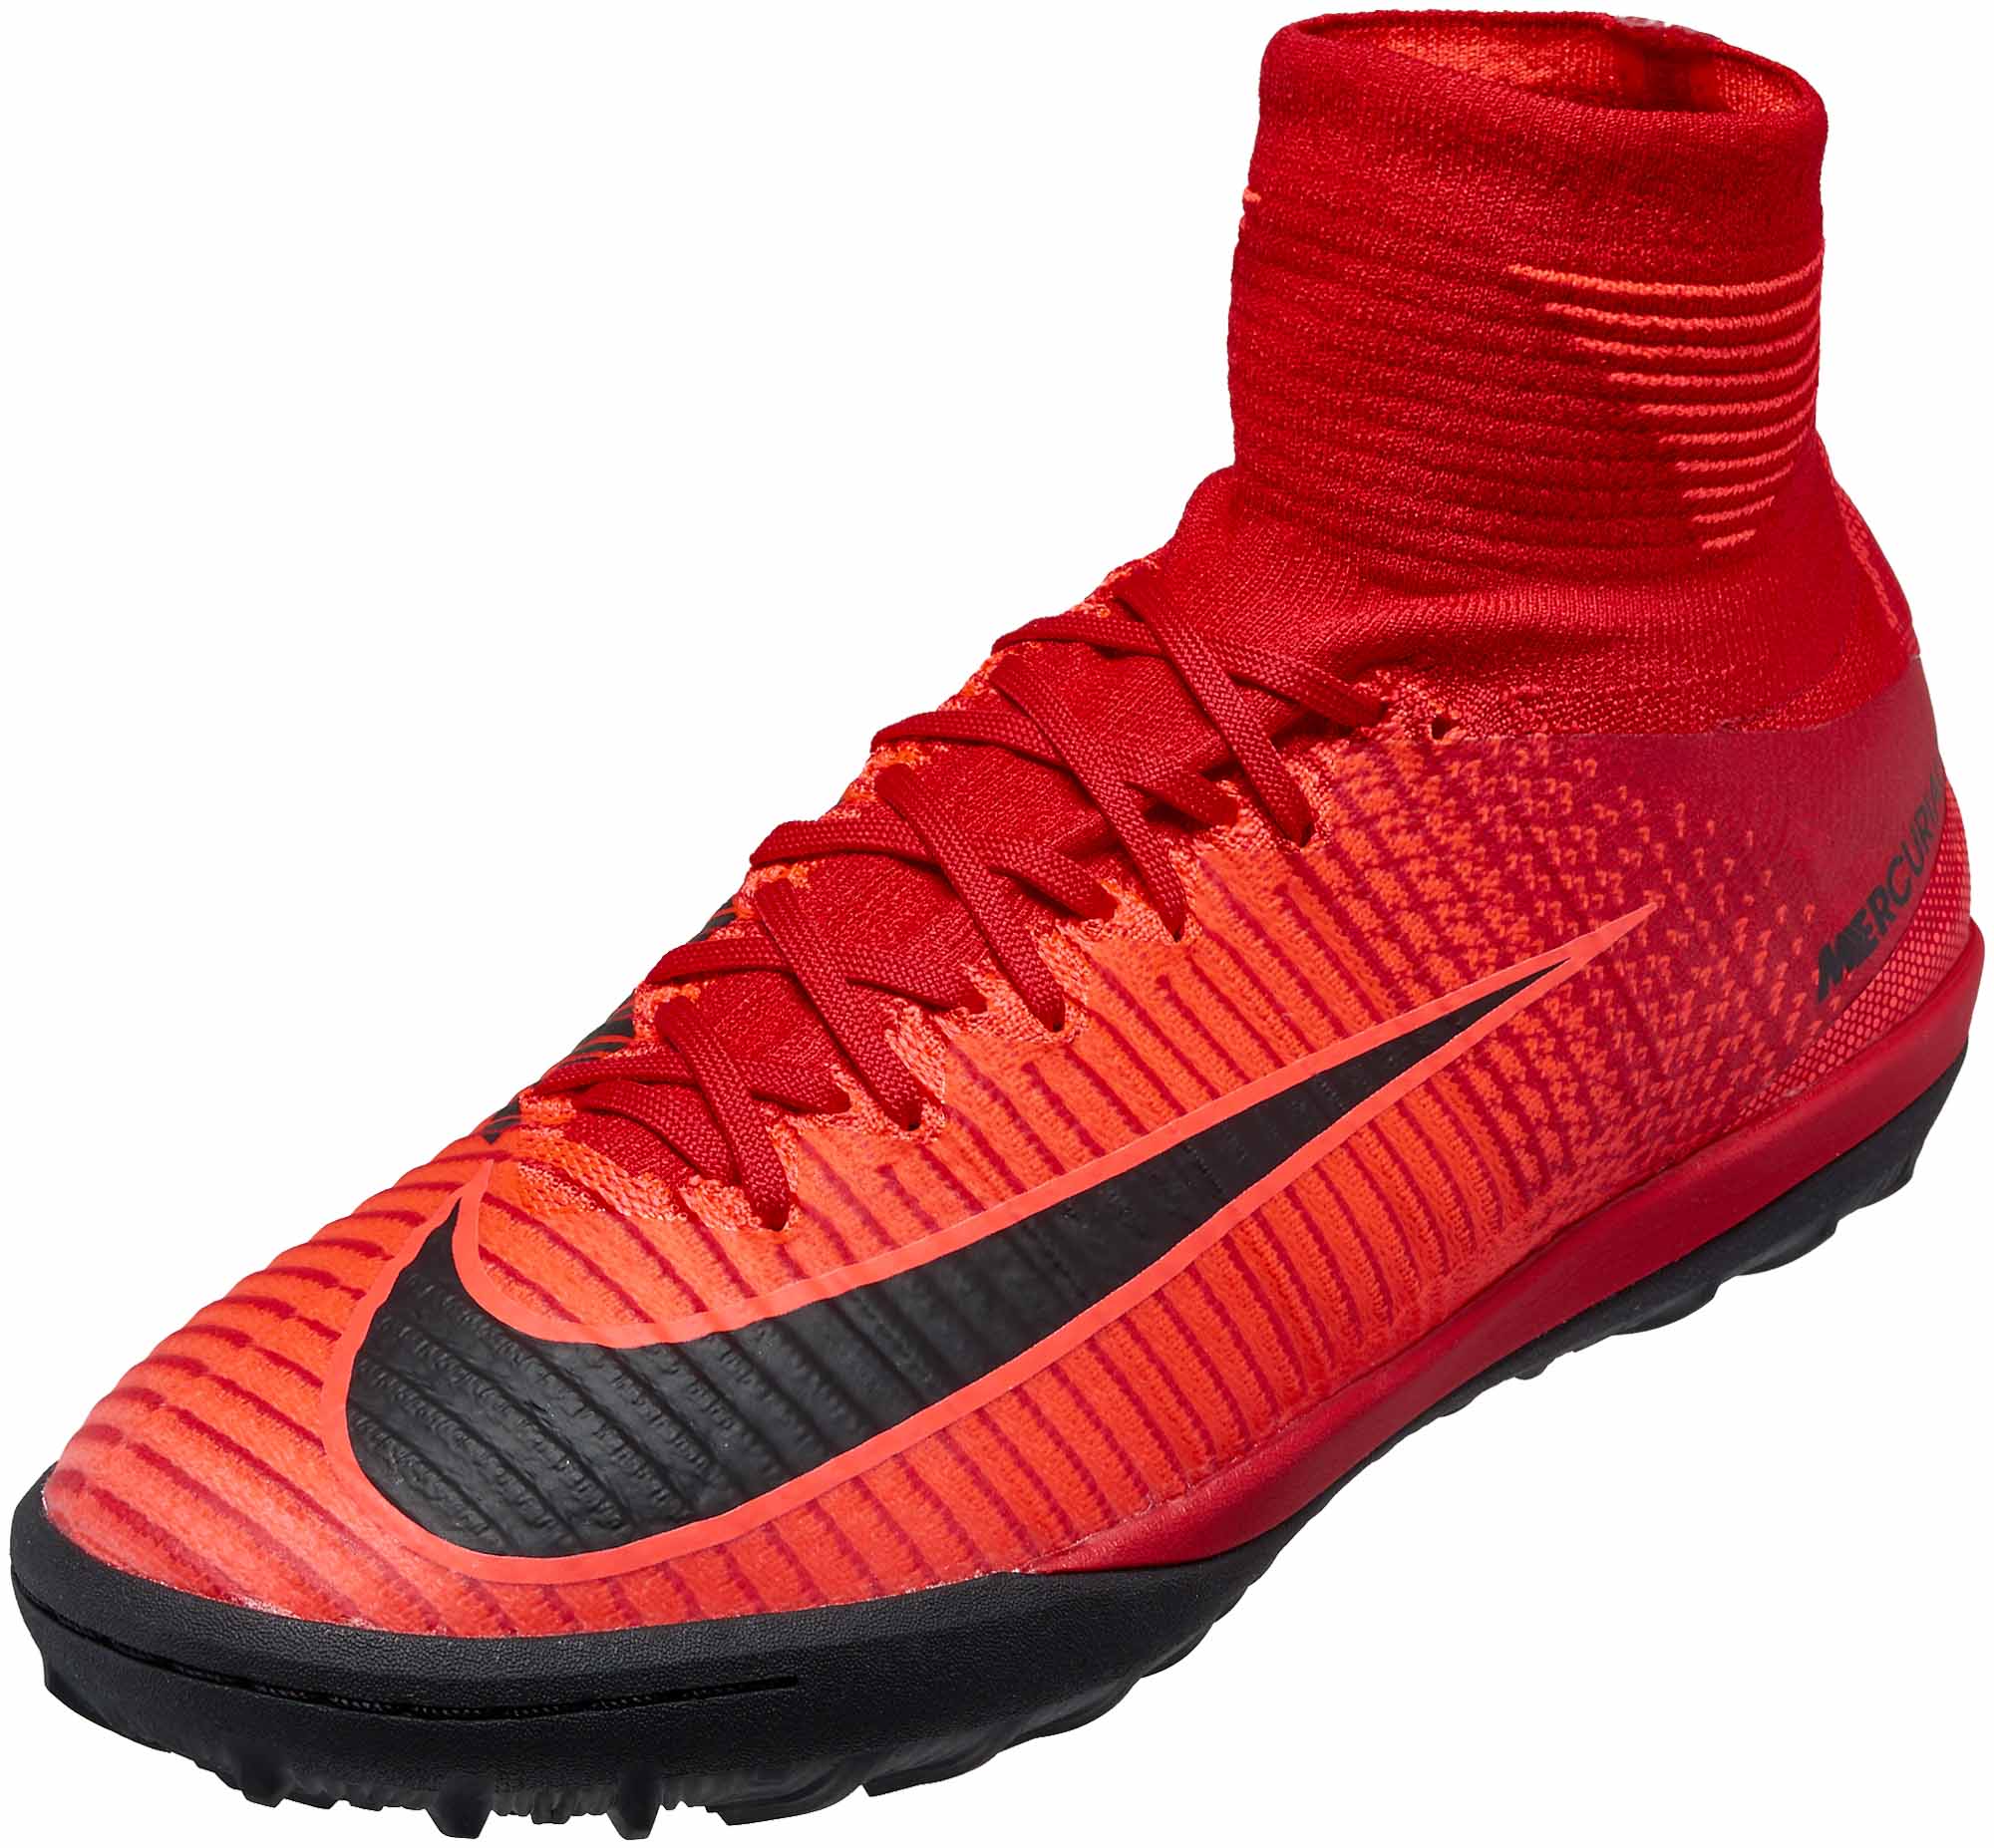 Nike MercurialX Proximo II TF - University Red \u0026 Black